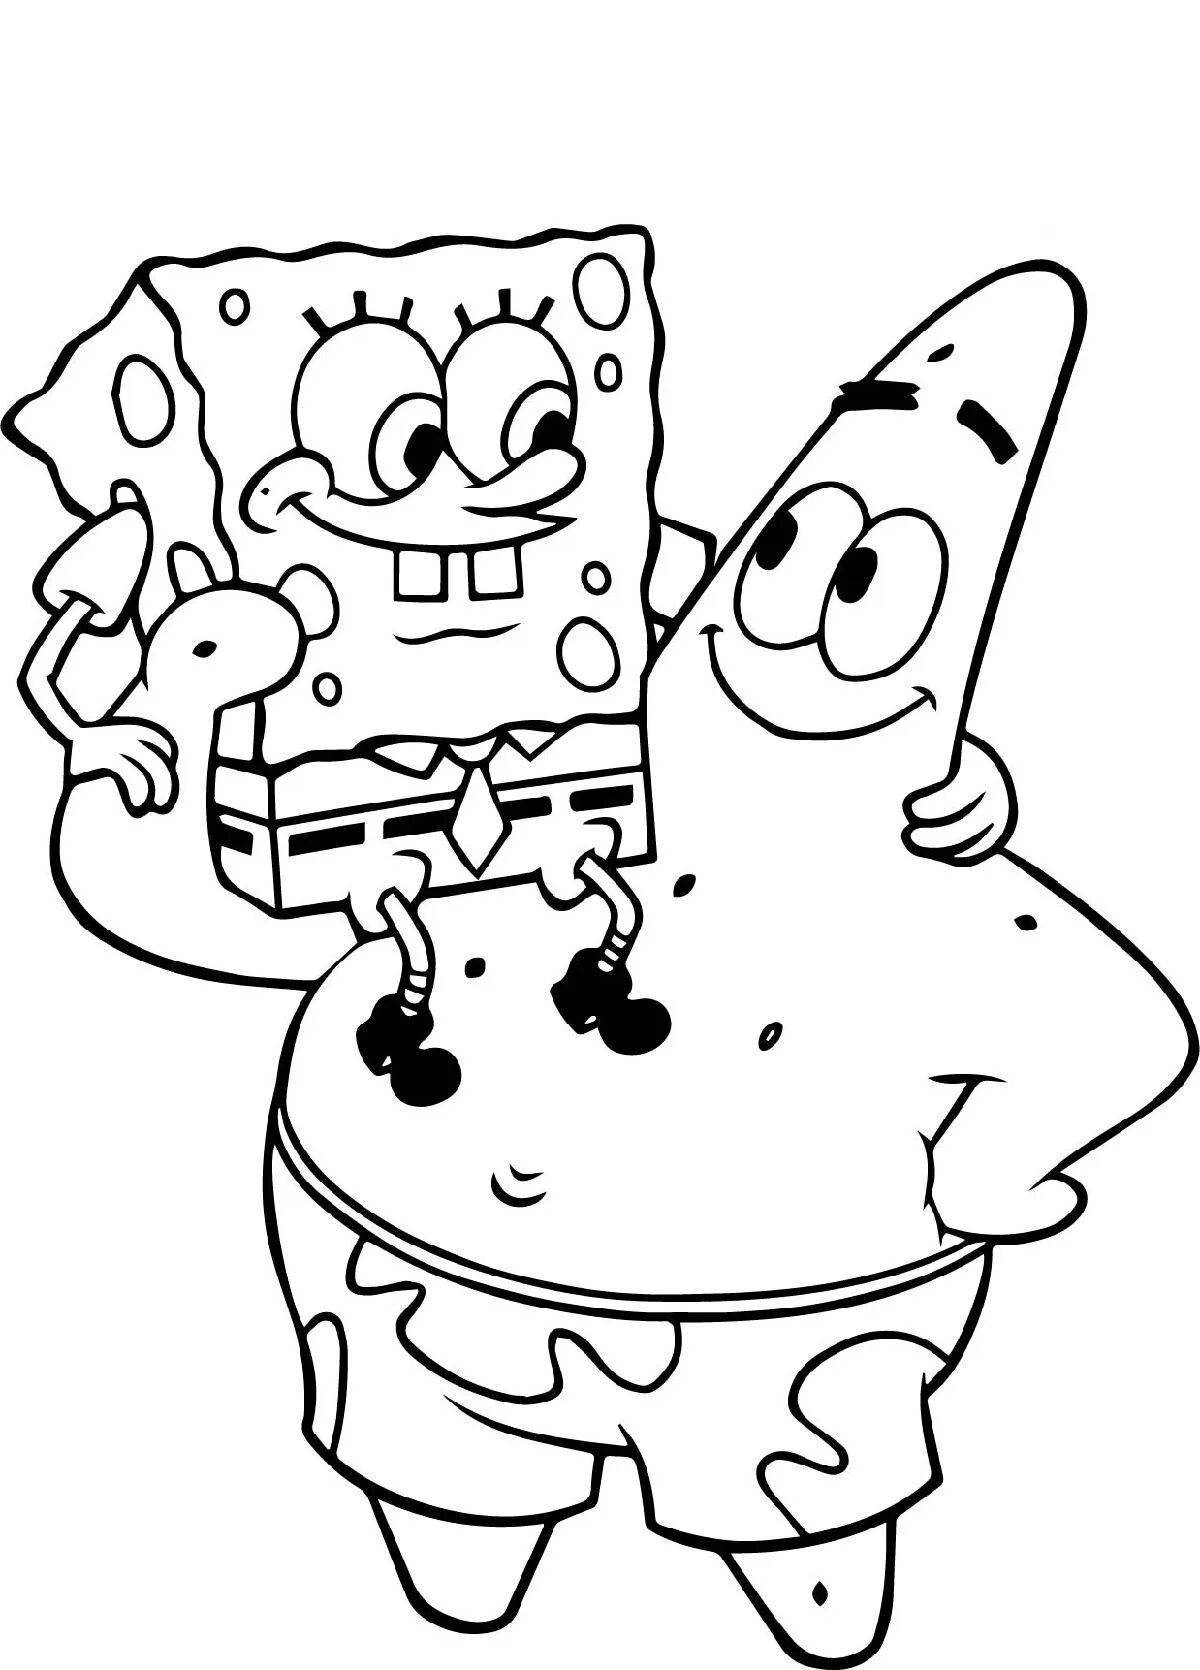 Joyful coloring spongebob and patrick